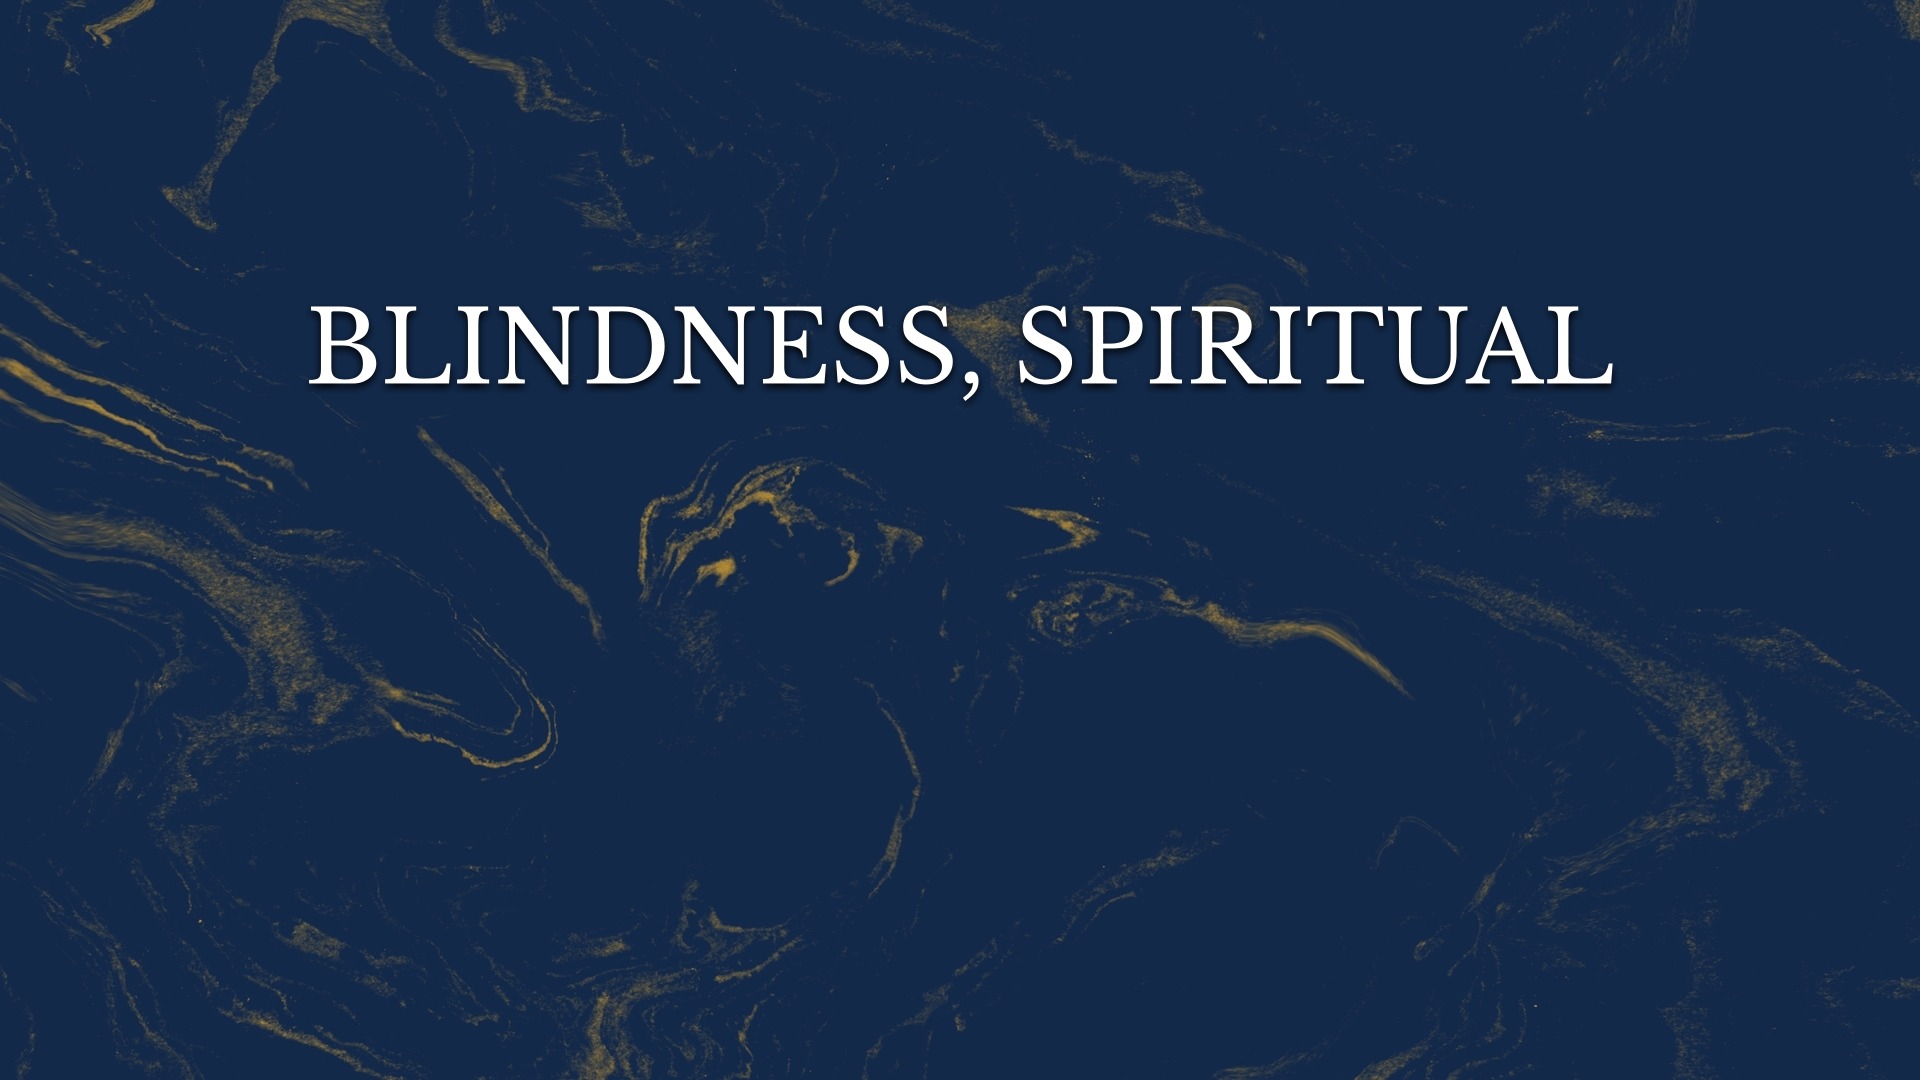 Blindness, spiritual